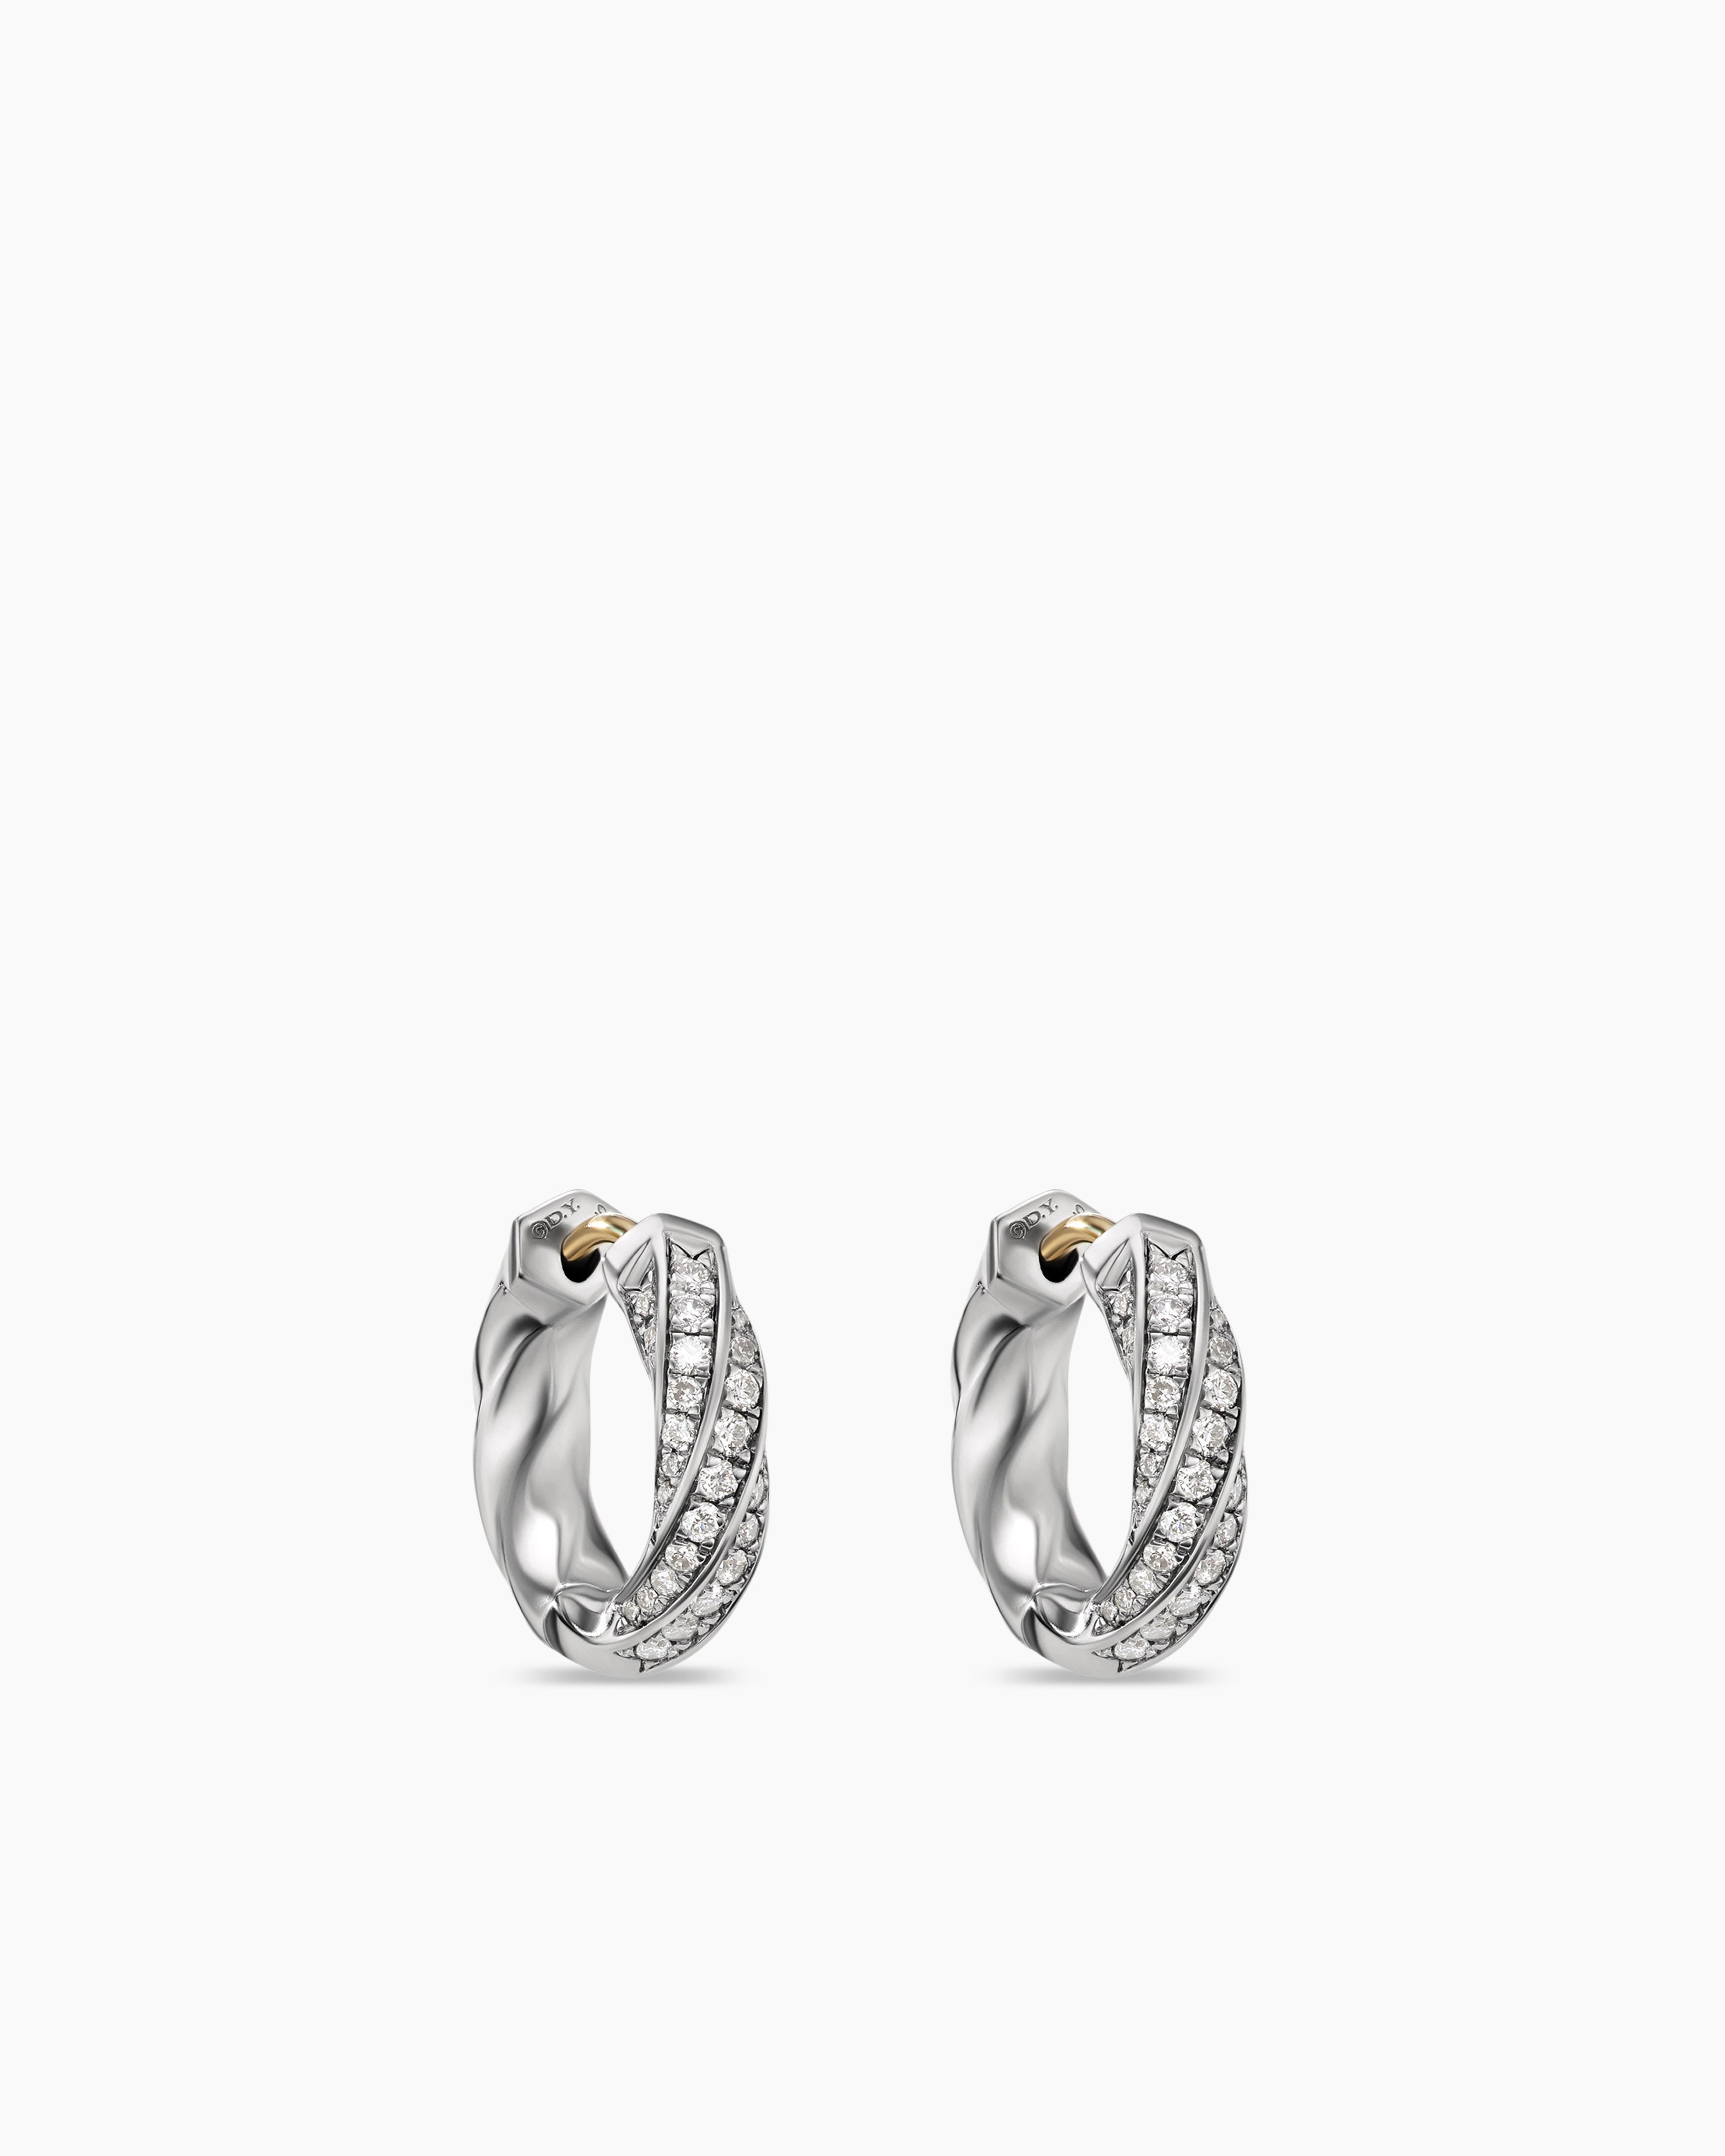 Cable Edge® Huggie Hoop Earrings in Sterling Silver with Diamonds, 13mm |  David Yurman